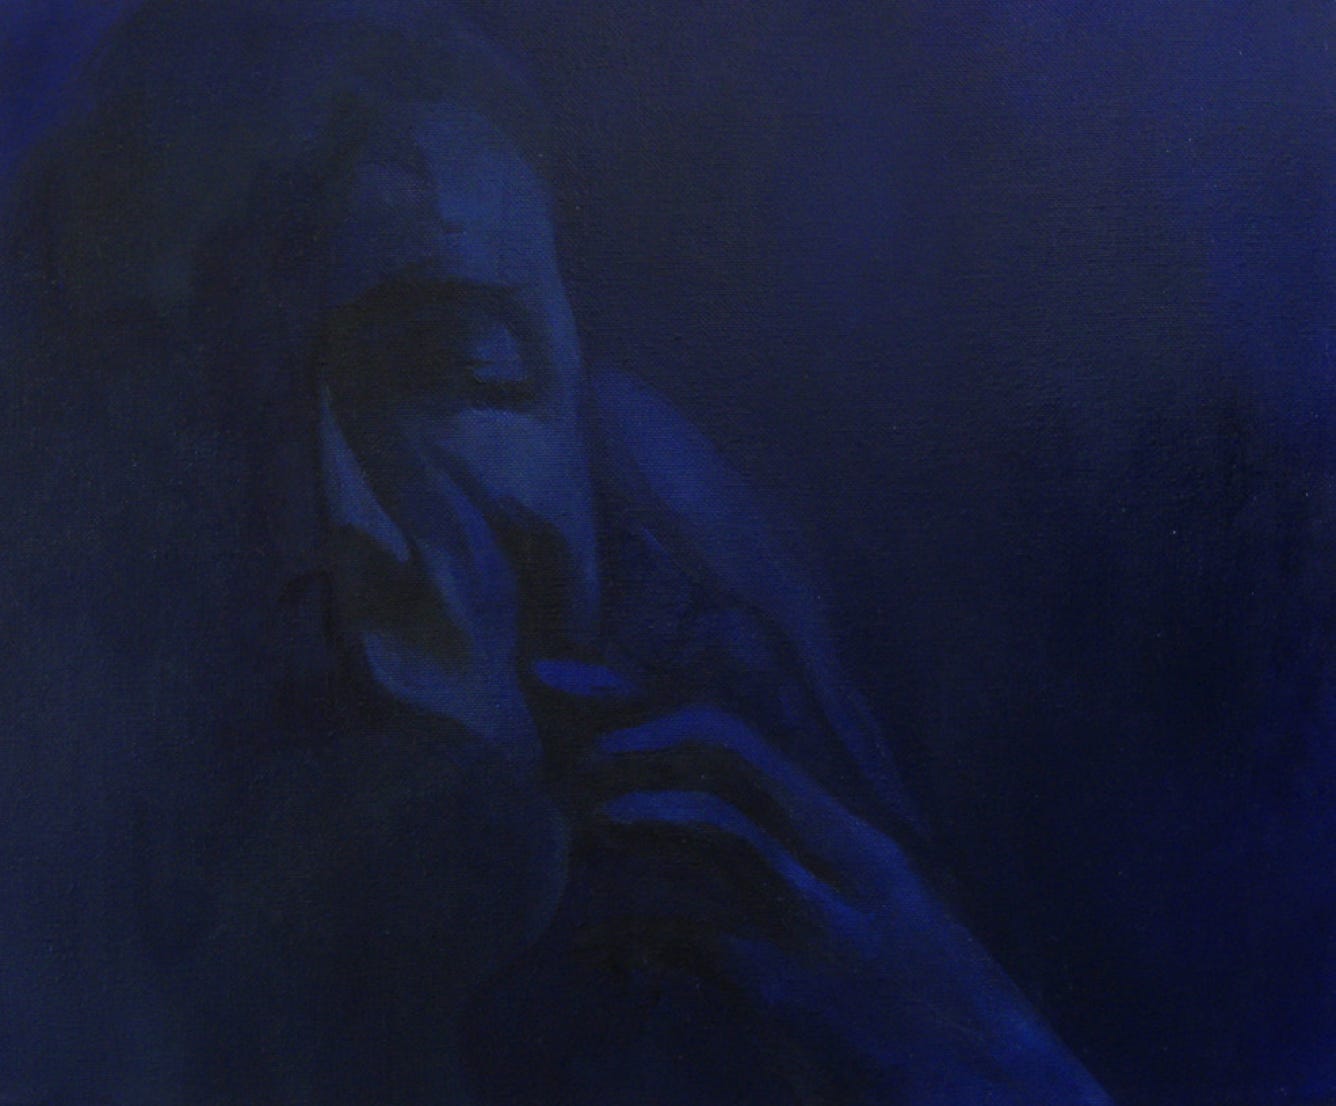 33x40 cm, oil on canvas, 2010